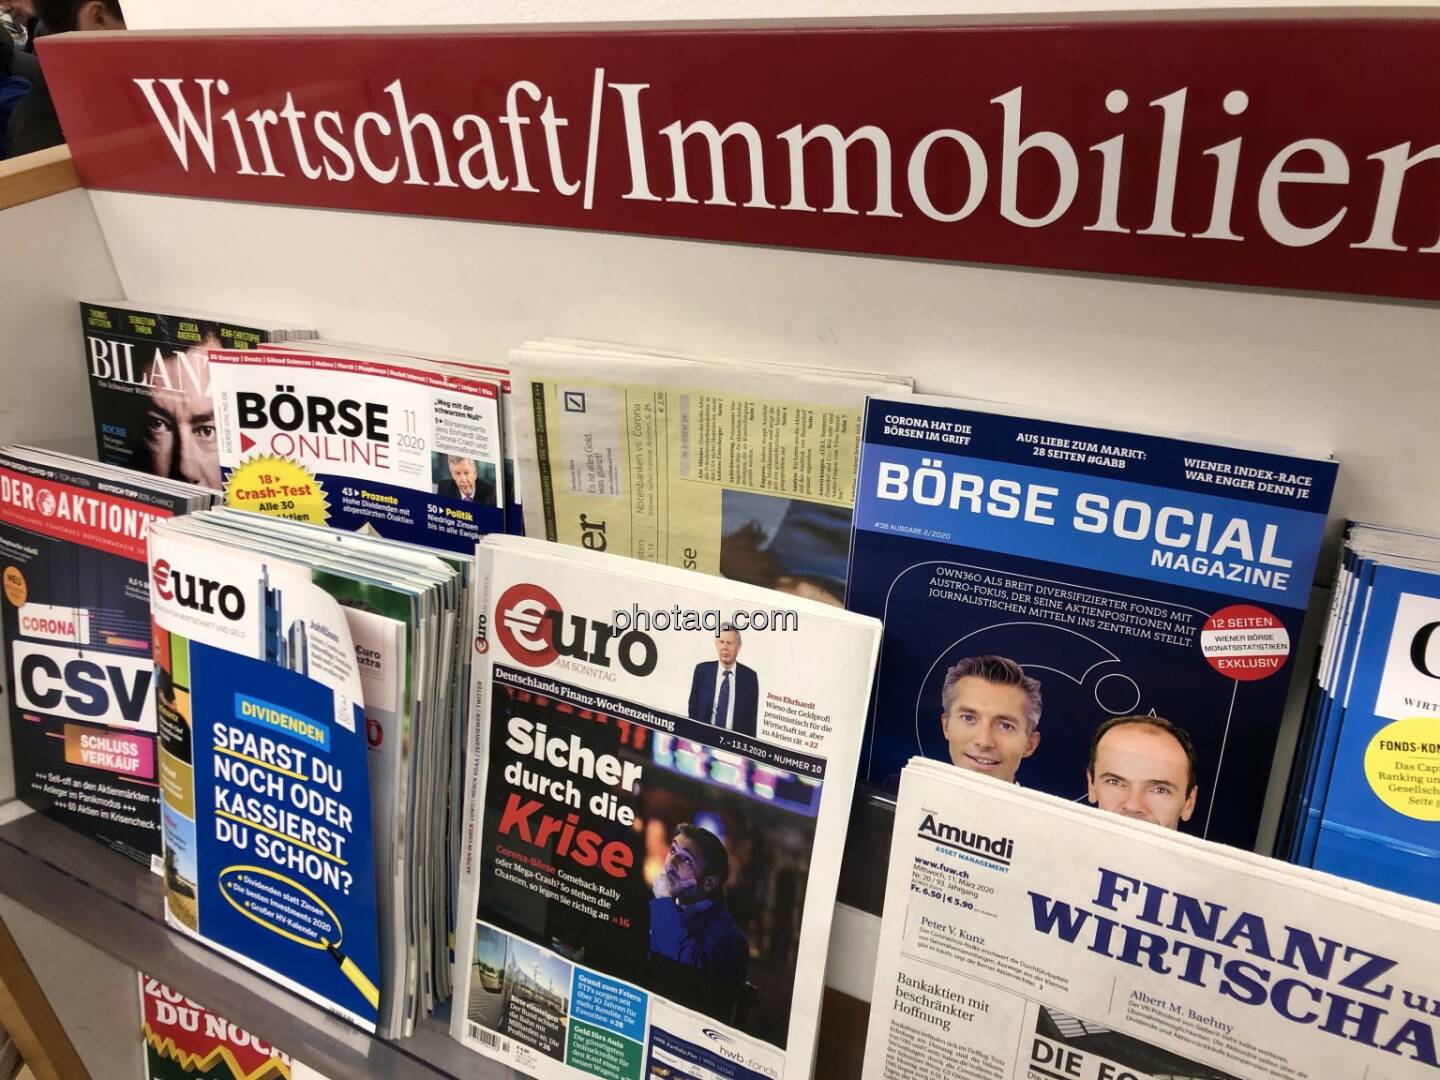 Börse Social Magazine #38, Kiosk, Morawa, Own360, Markus Fallenböck & Thomas Niss
http://boerse-social.com/magazine